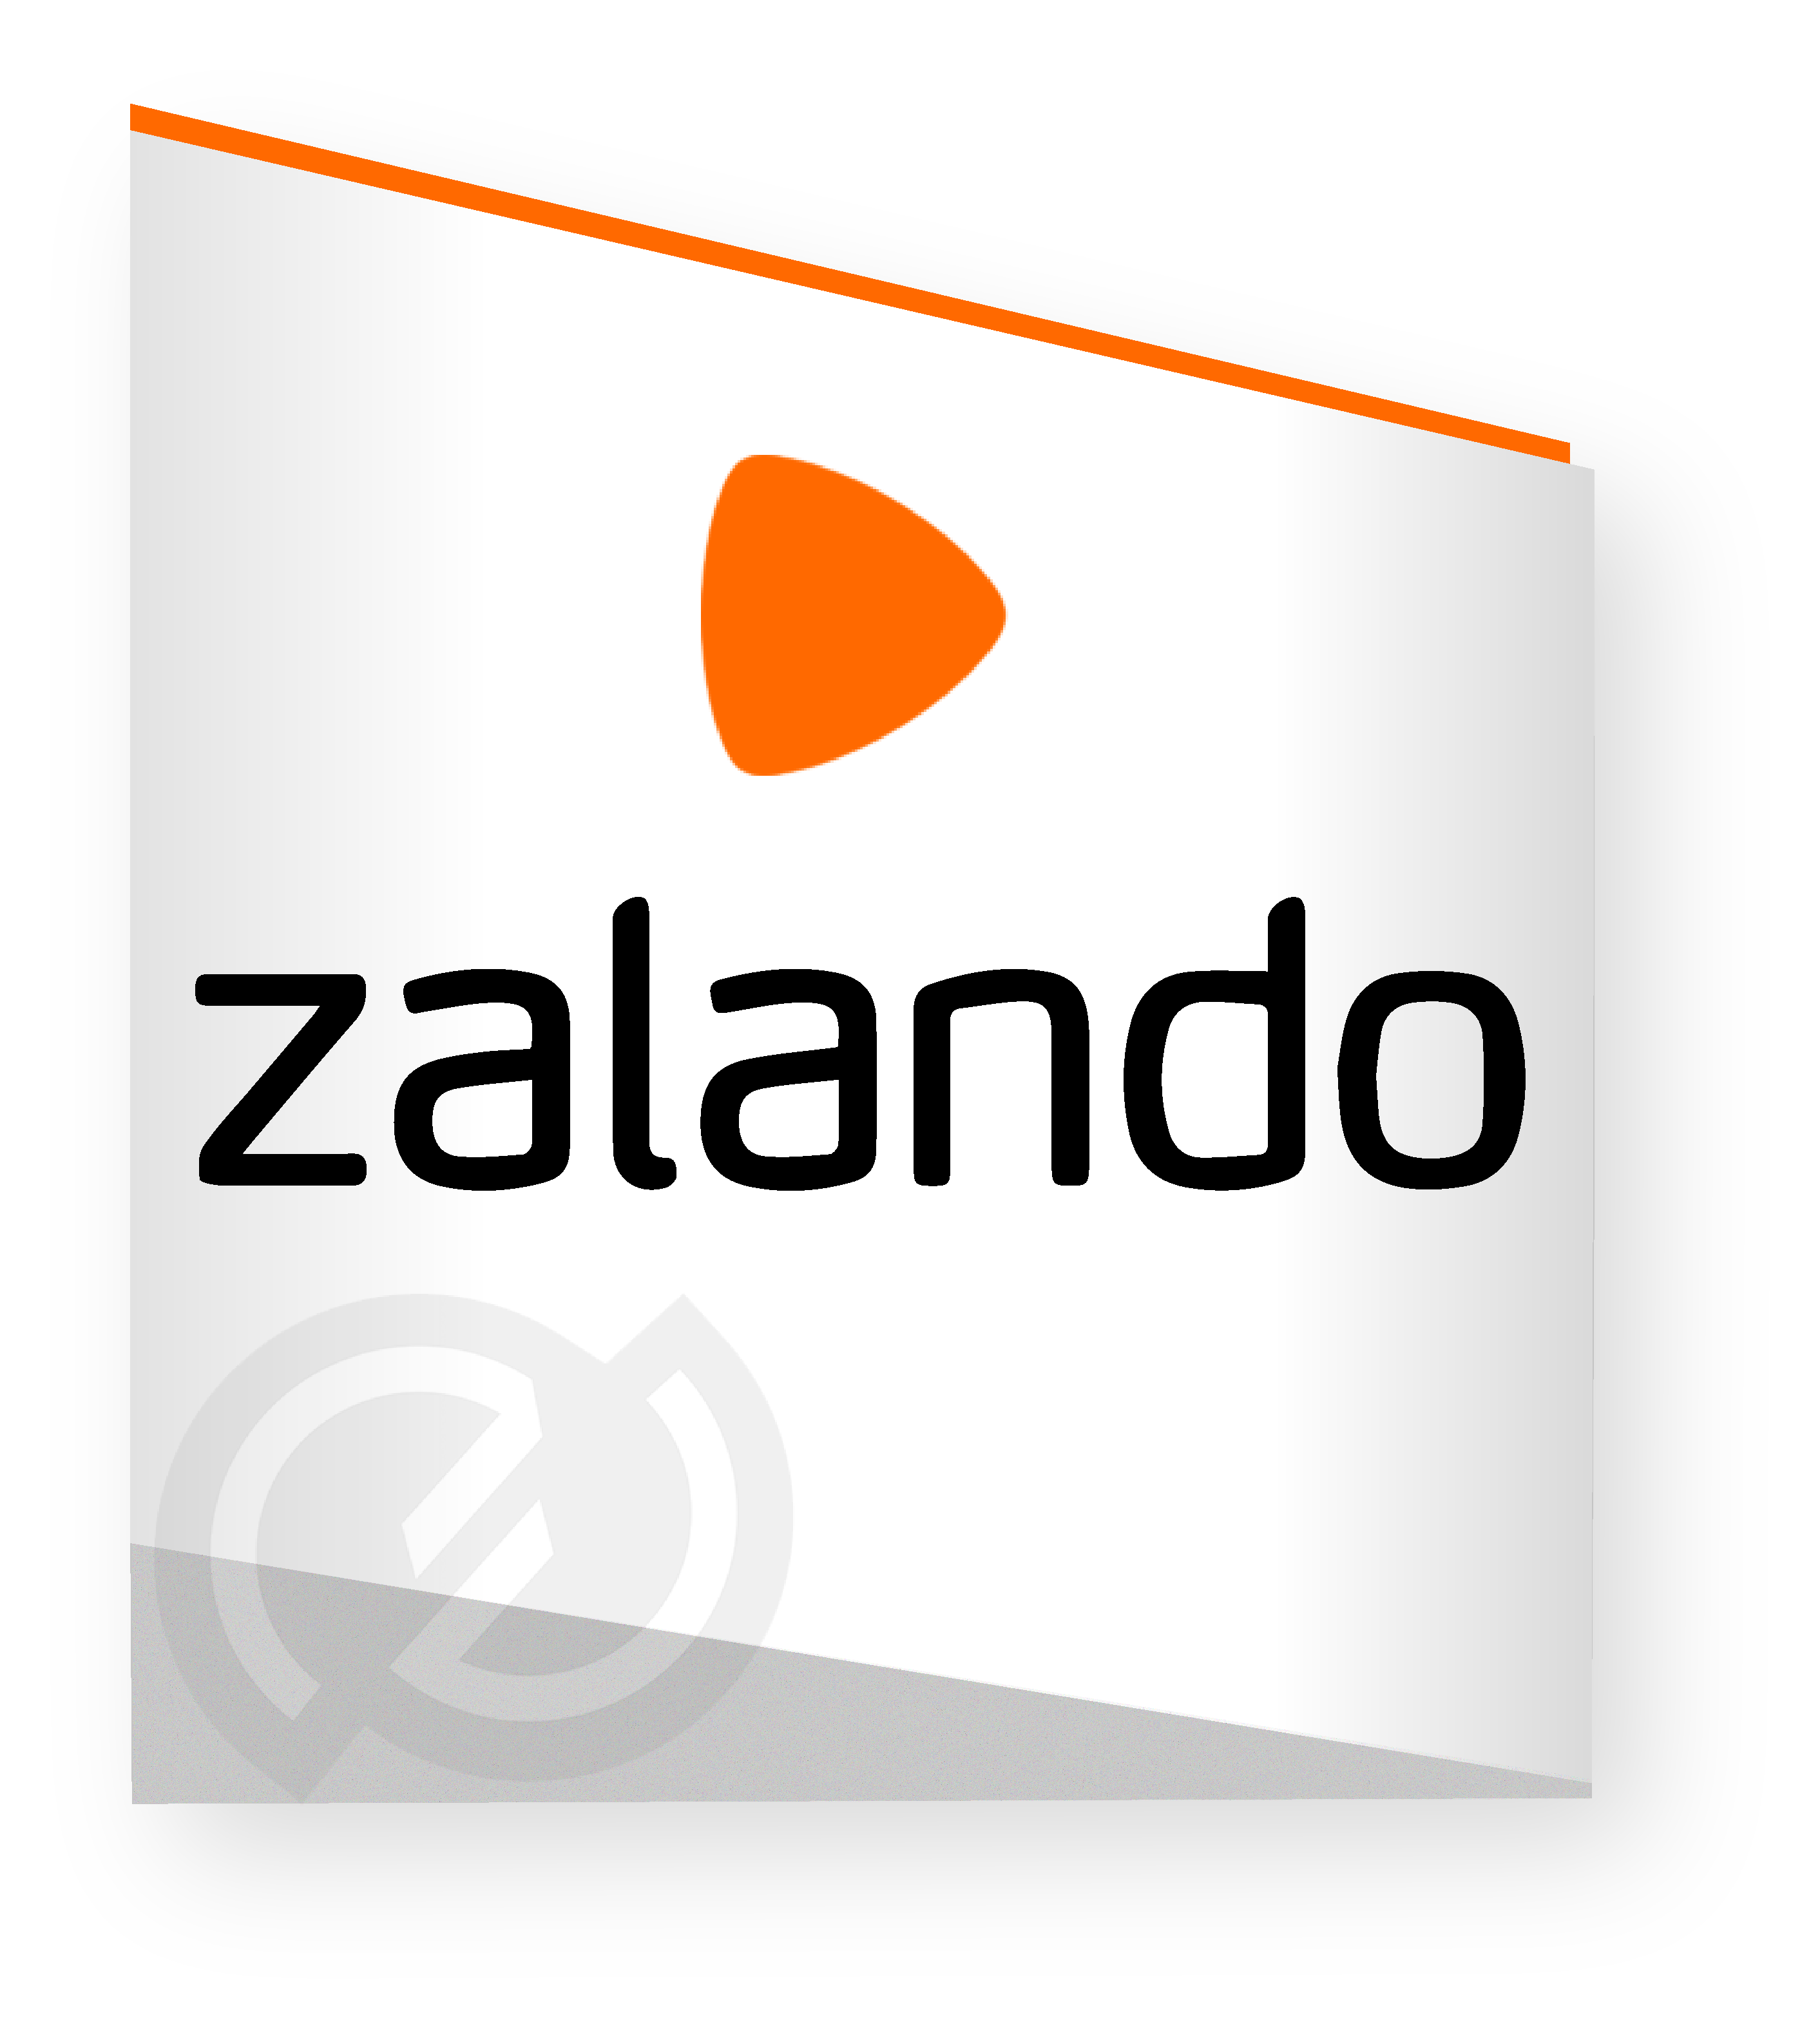 Image logo Zalando